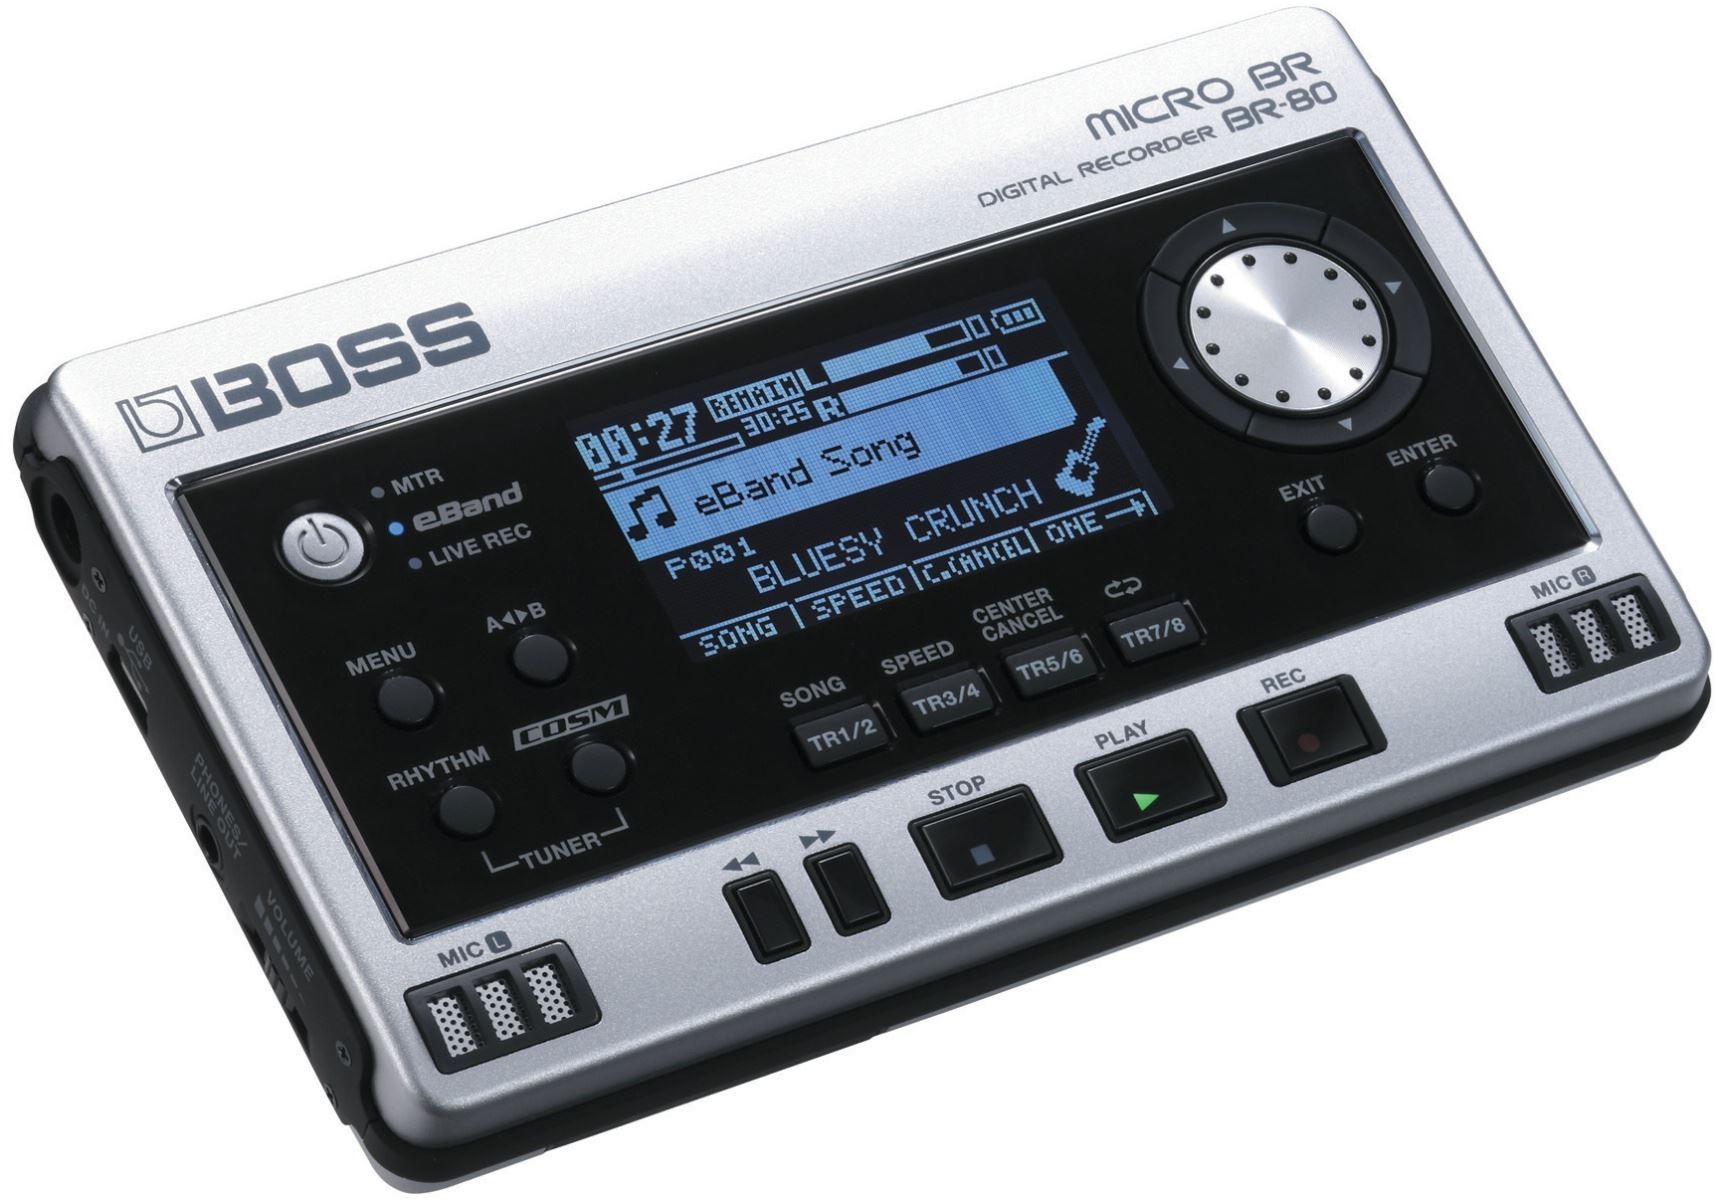 BOSS BR-80 - MICRO BR Digital Recorder